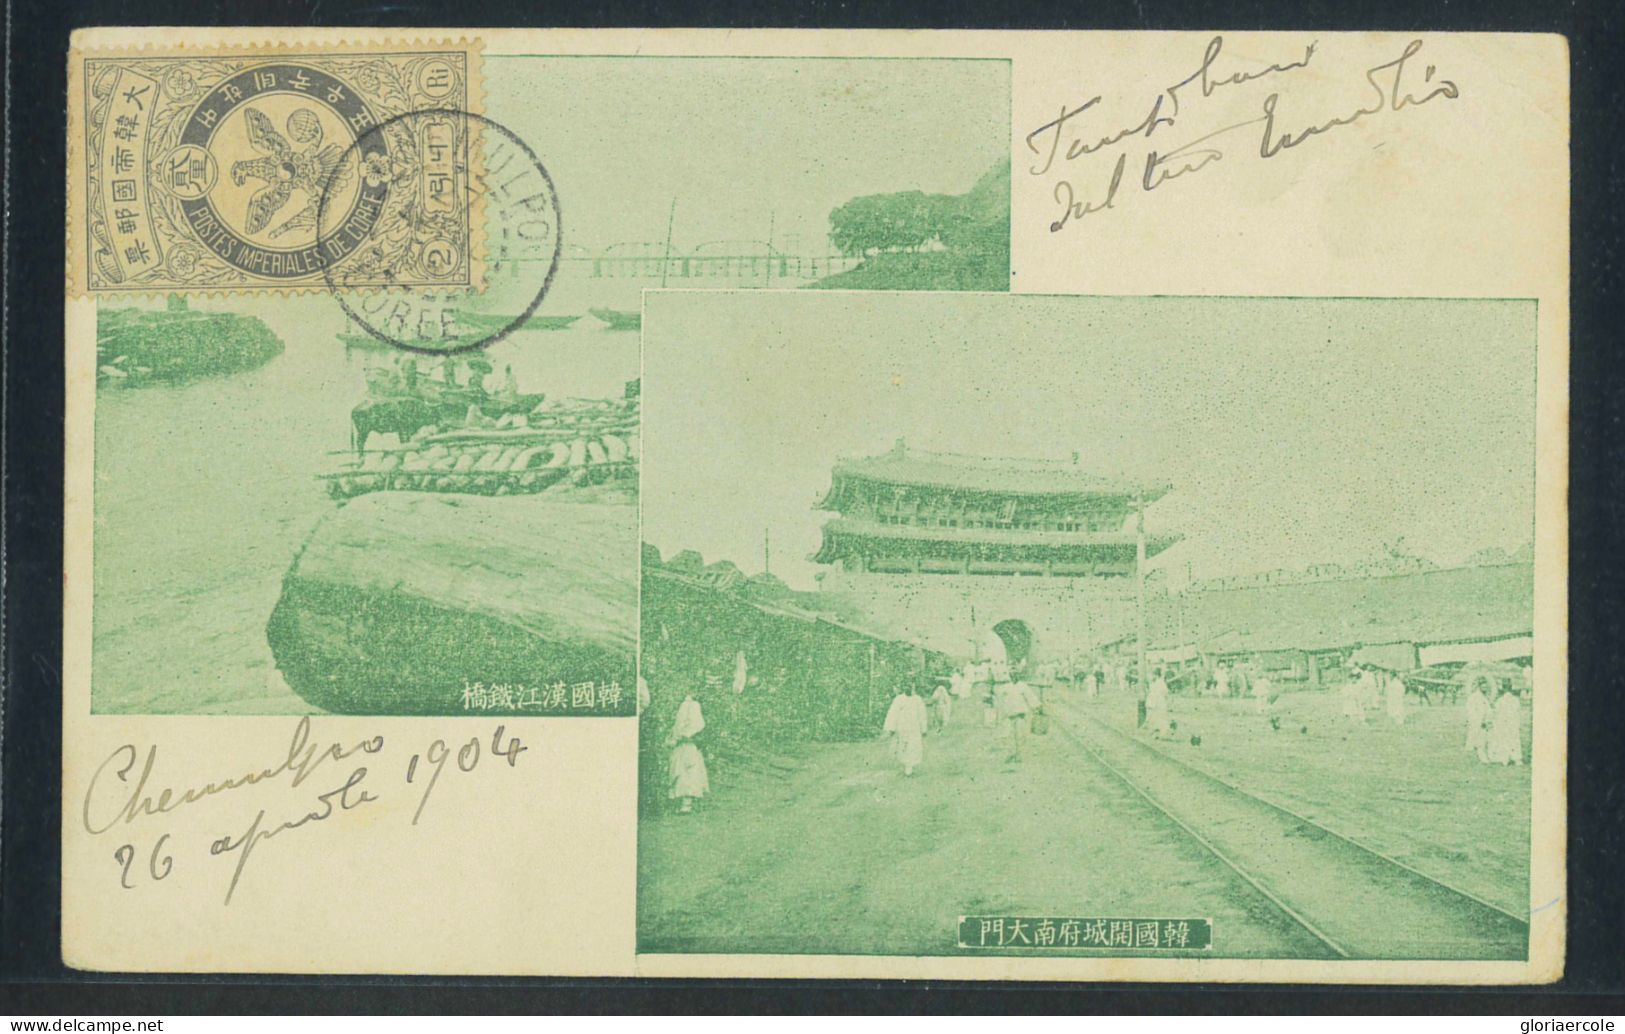 P2347 - KOREA/JAPAN, MIXED FRANKING. - Korea (...-1945)